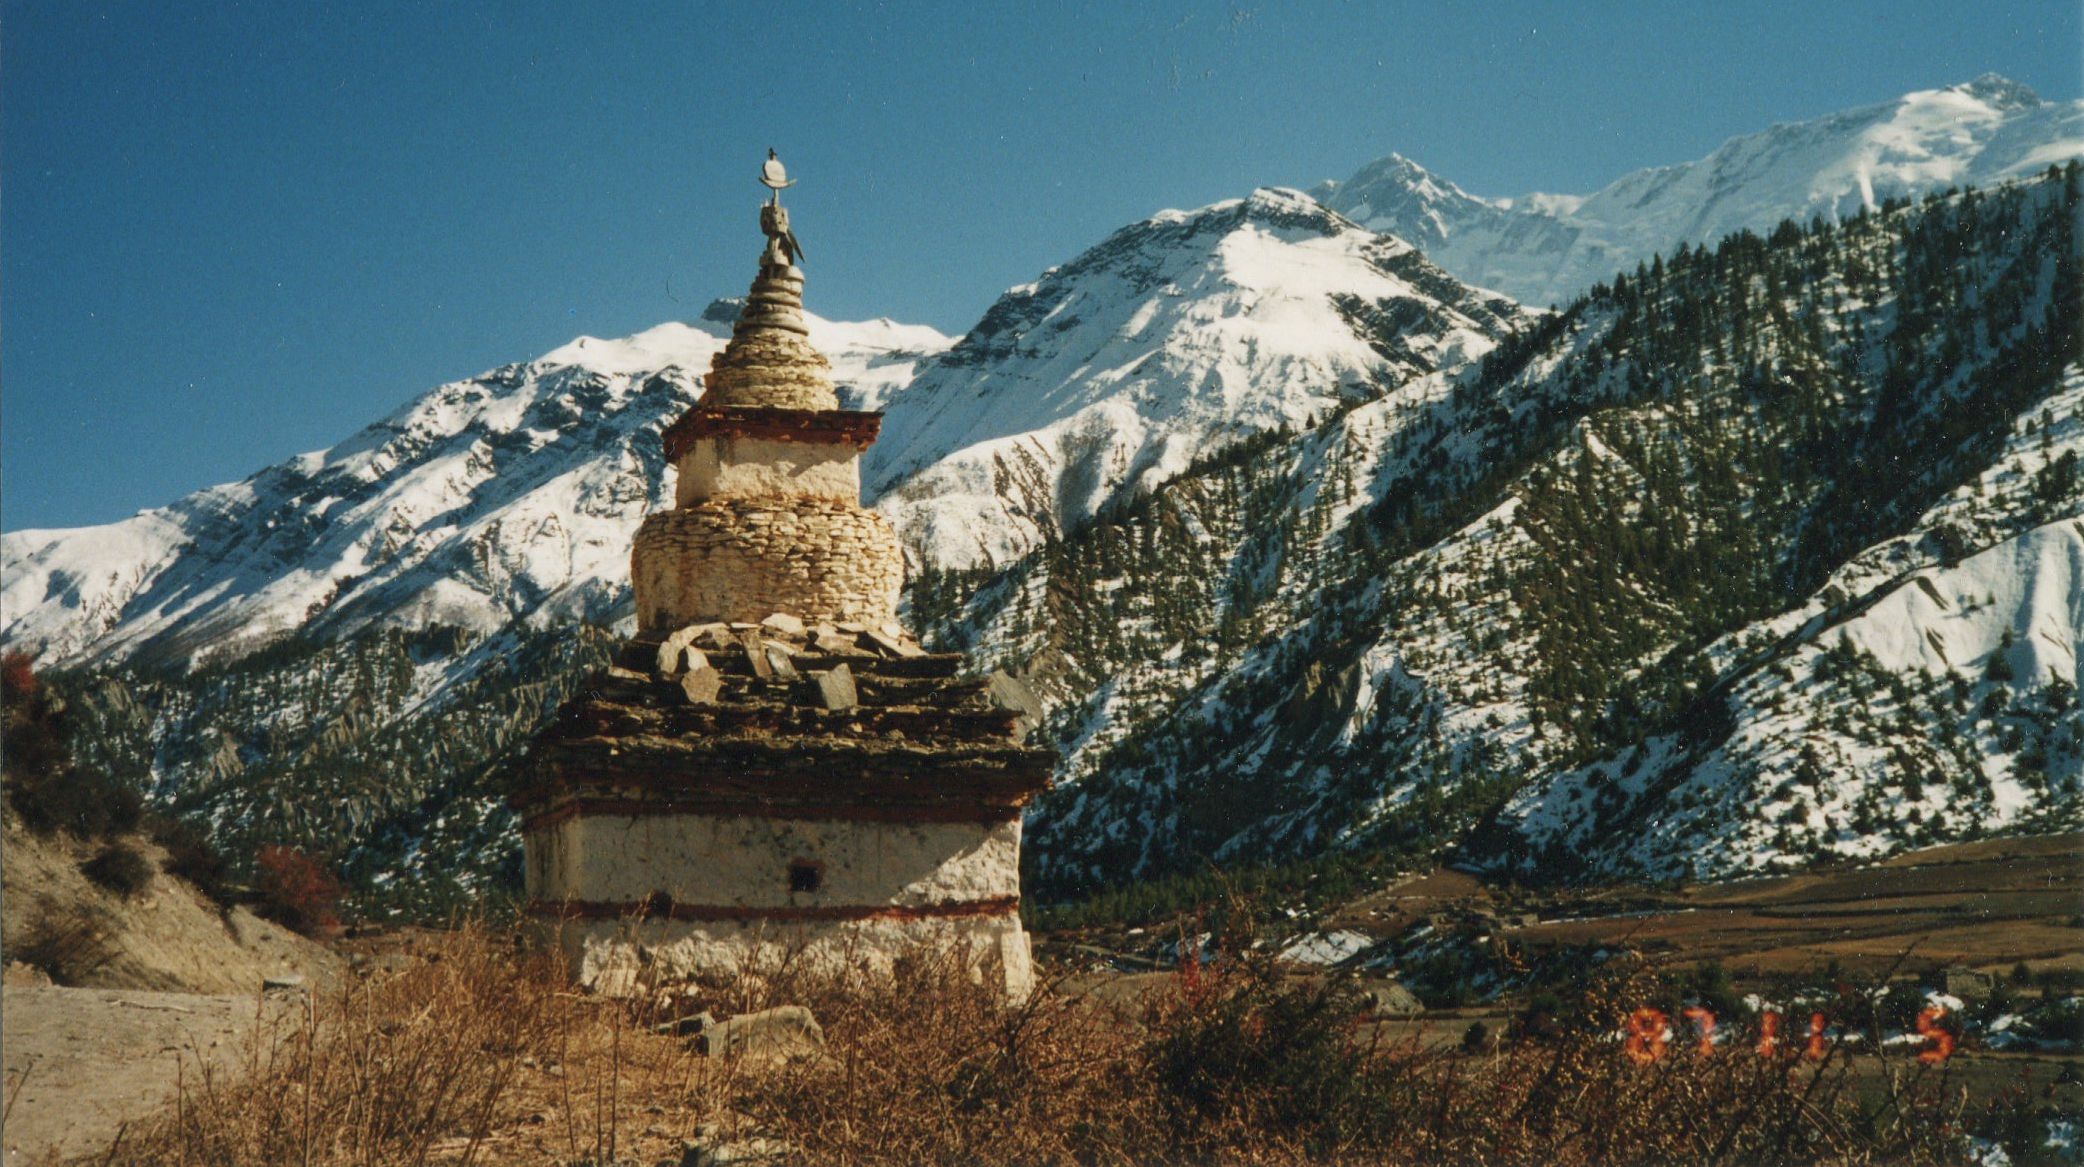 Chorten ( Buddhist Shrine ) in the Manang Valley beneath the Annapurna Himal